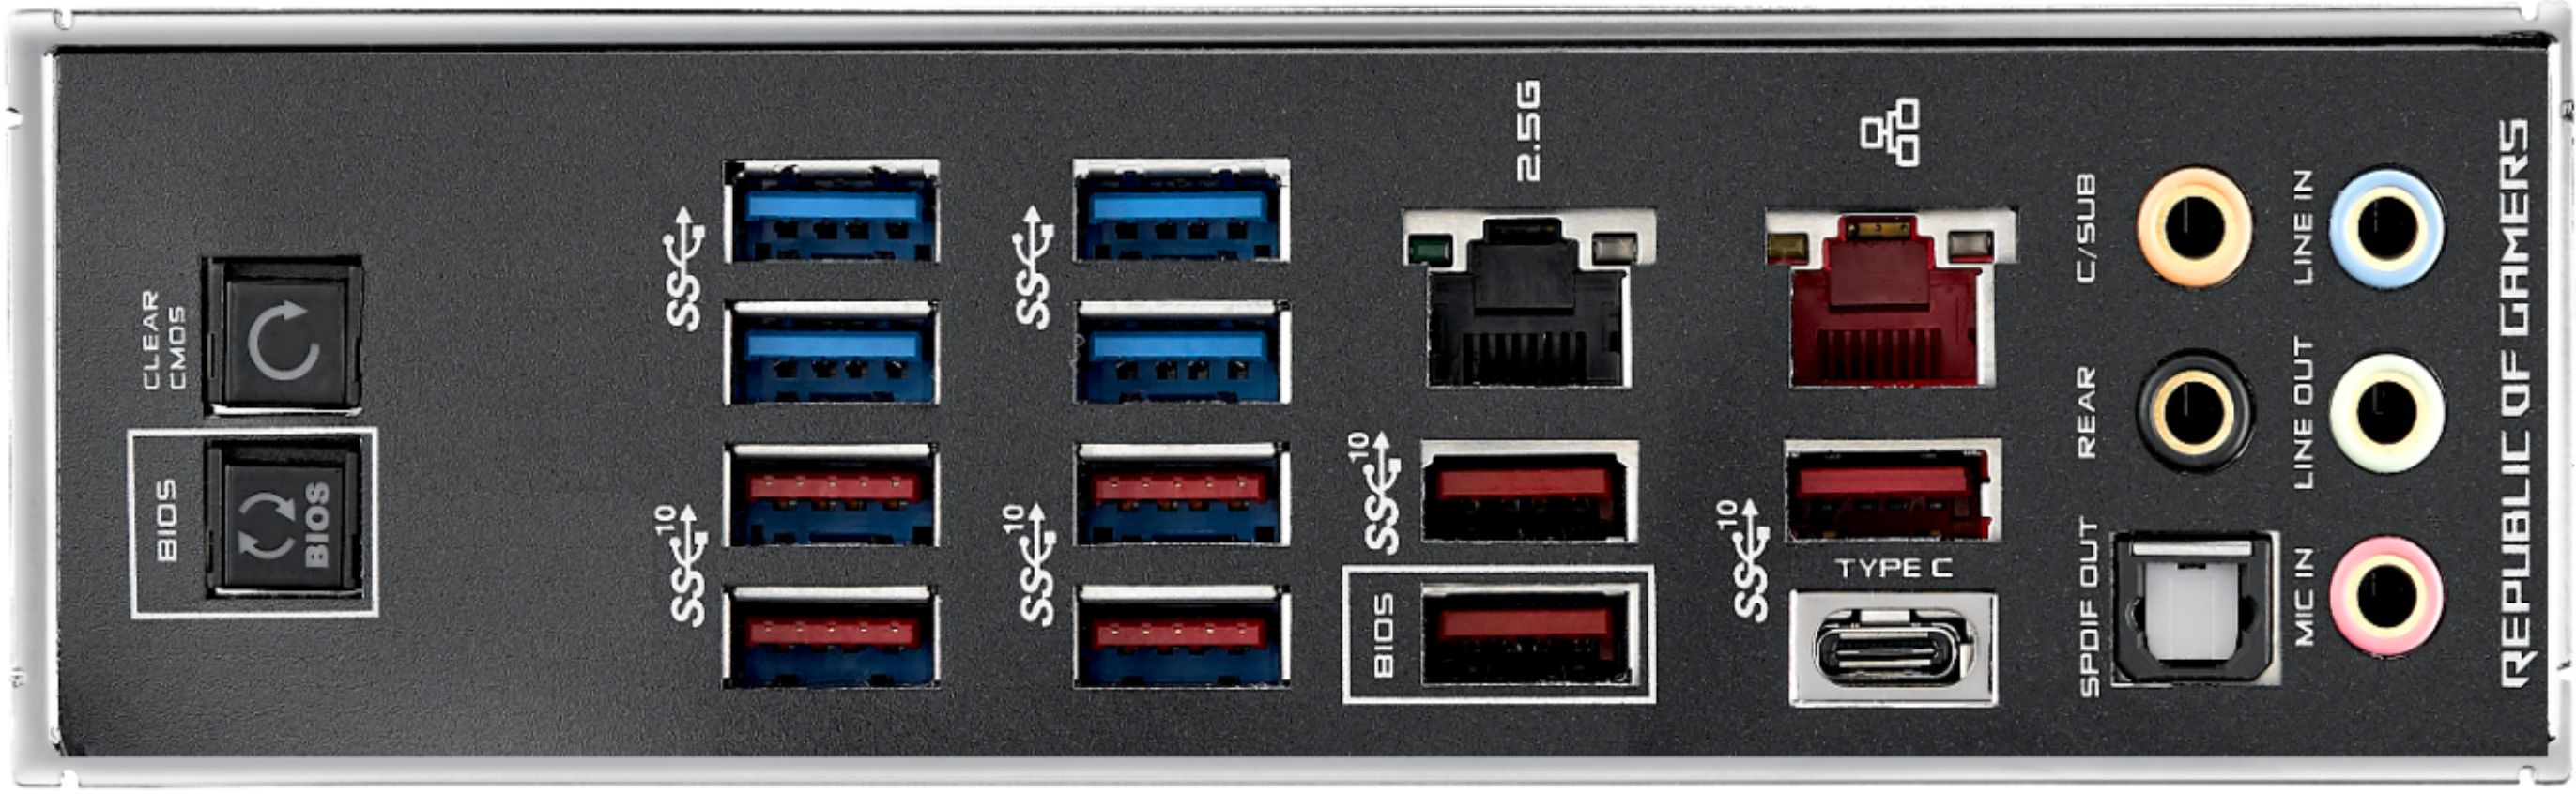 ASUS - ROG Crosshair VIII Hero (Socket AM4) USB-C Gen2 AMD Motherboard with  LED Lighting